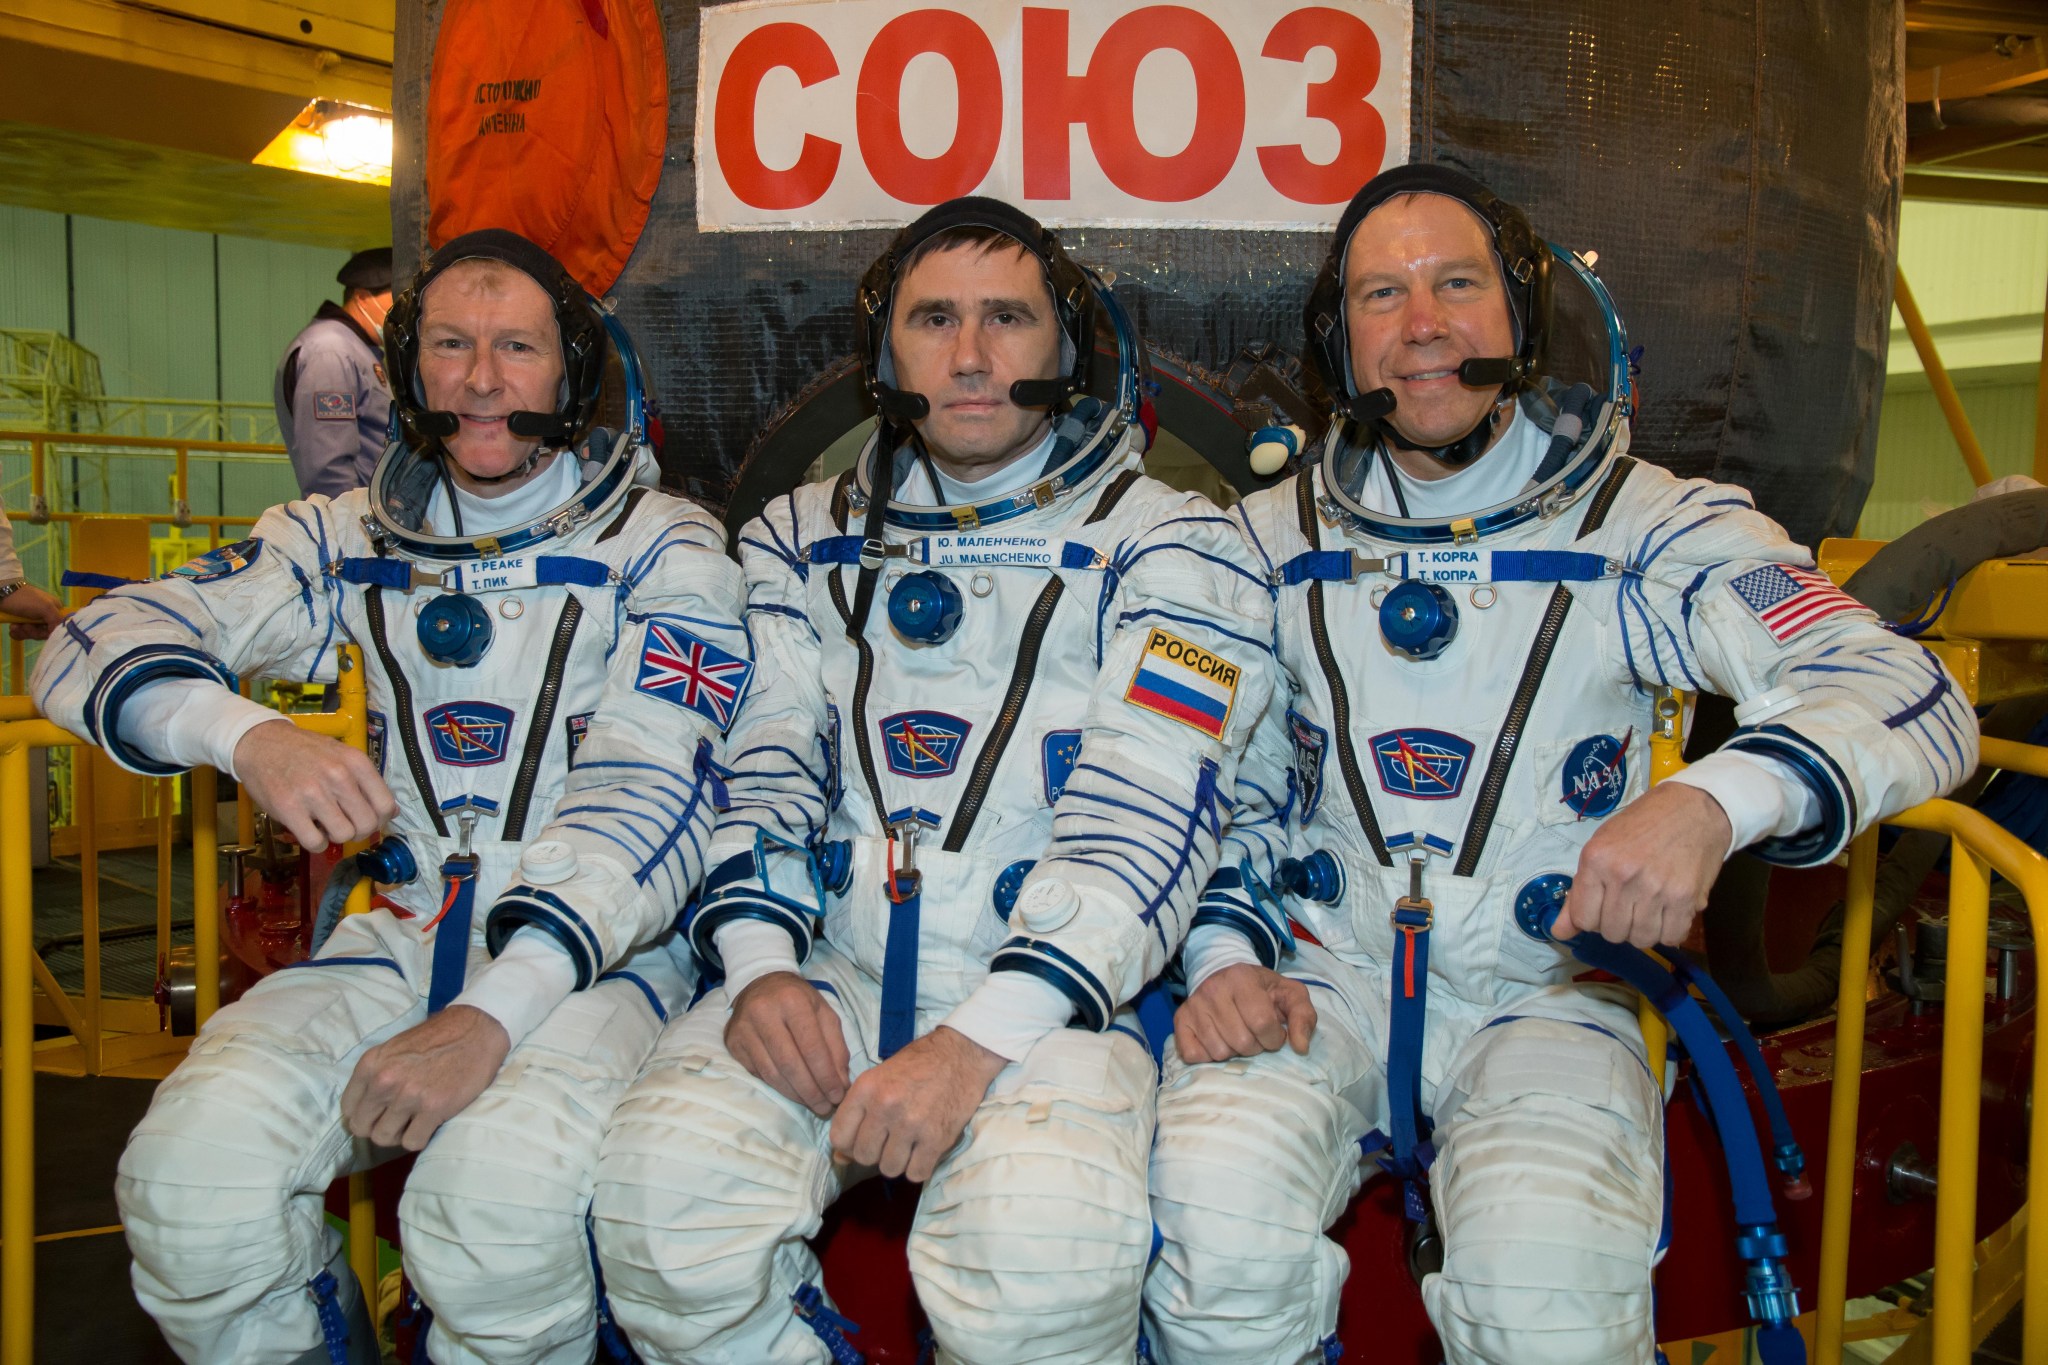 Expedition 46 crew